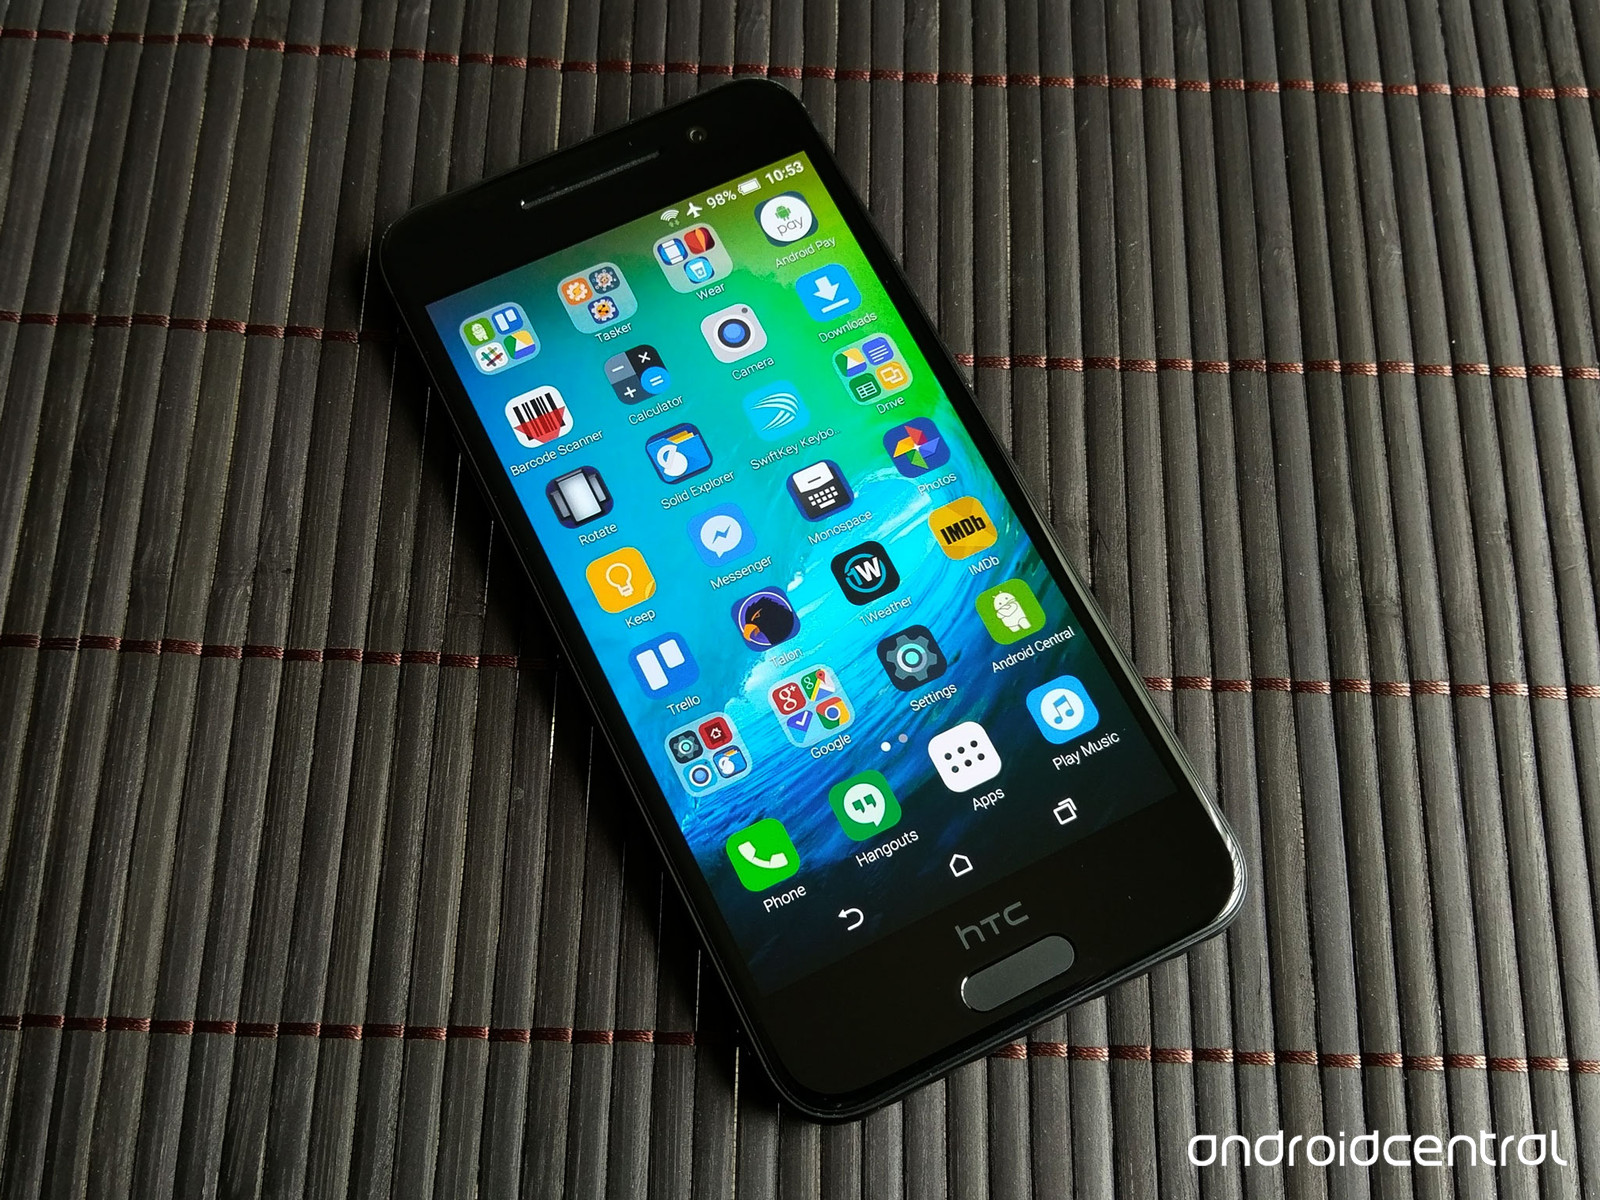 Iphone 5s launcher apk free download